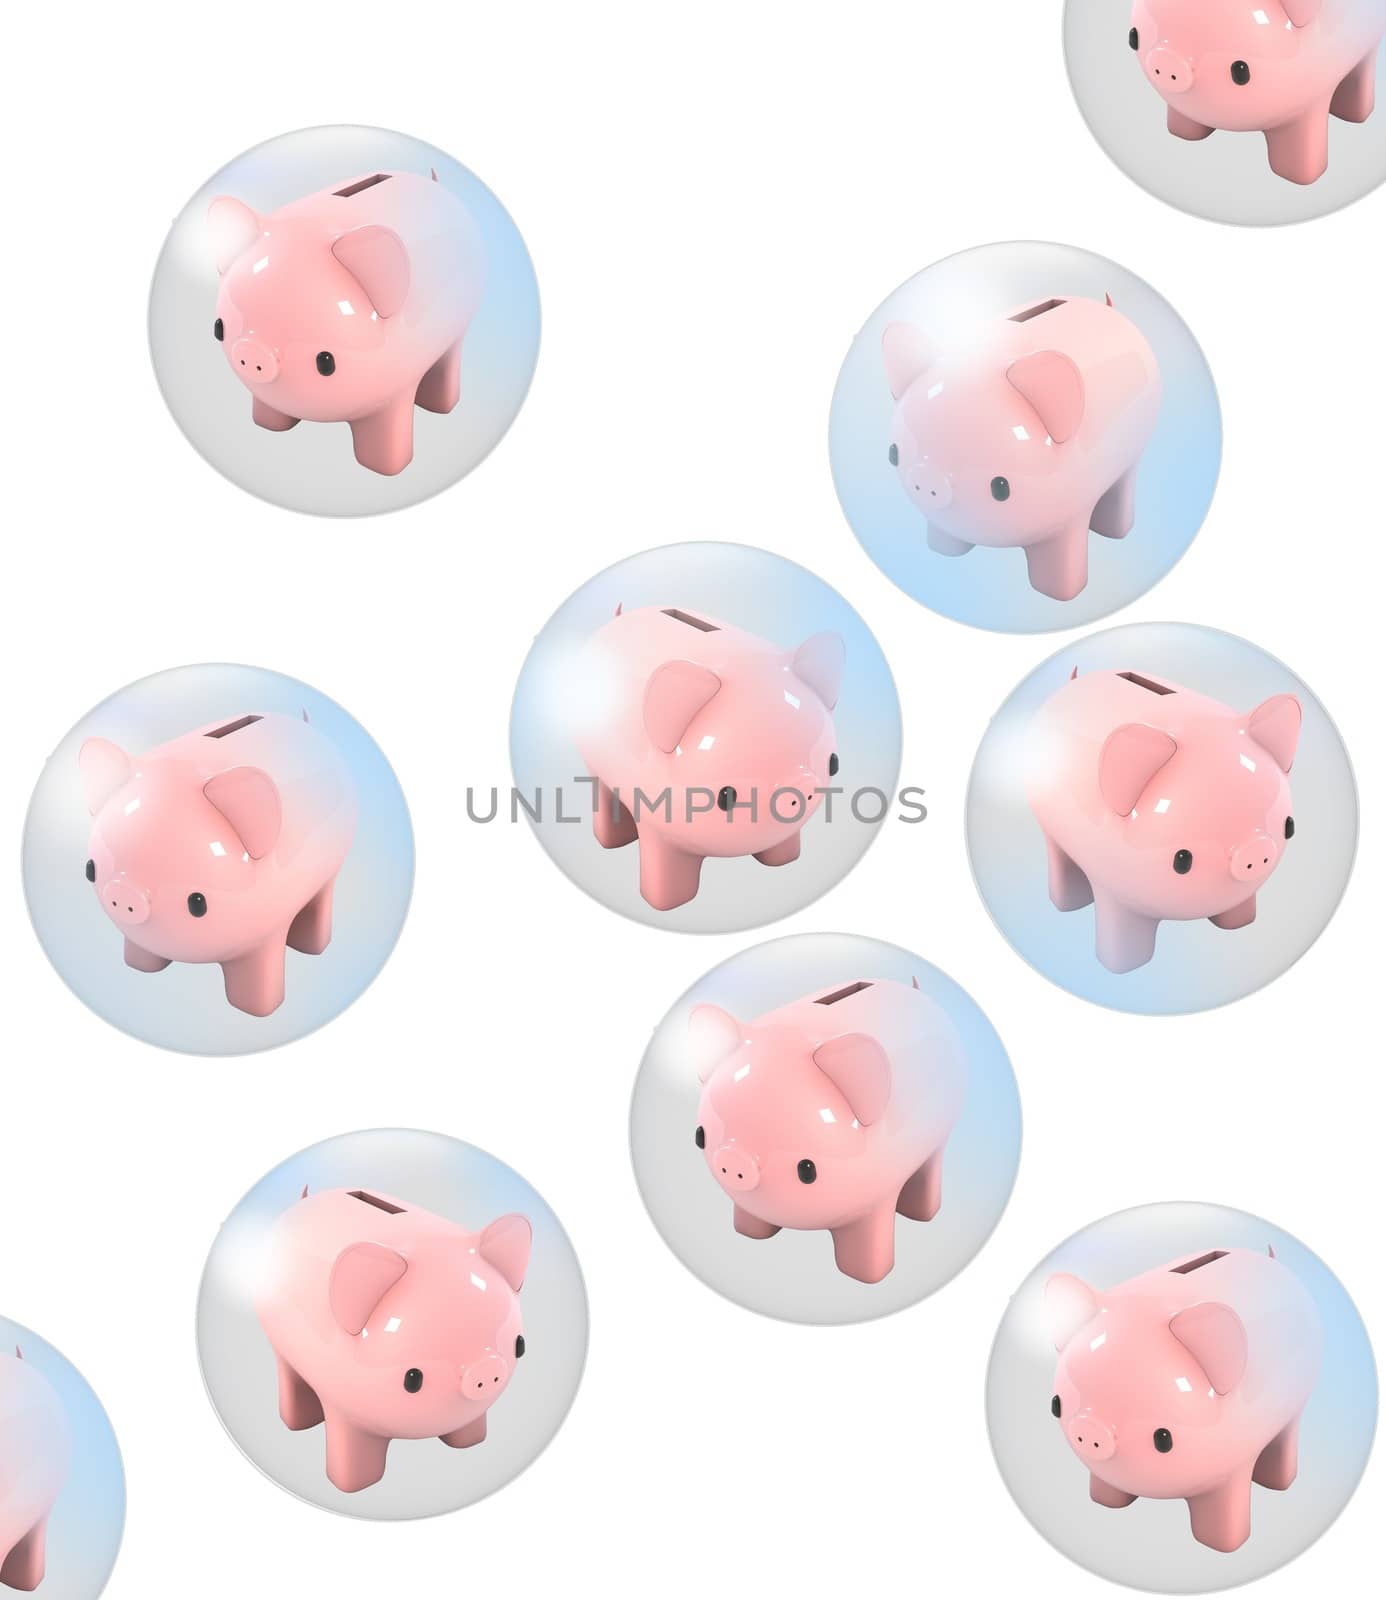 Piggy bank by Onigiristudio